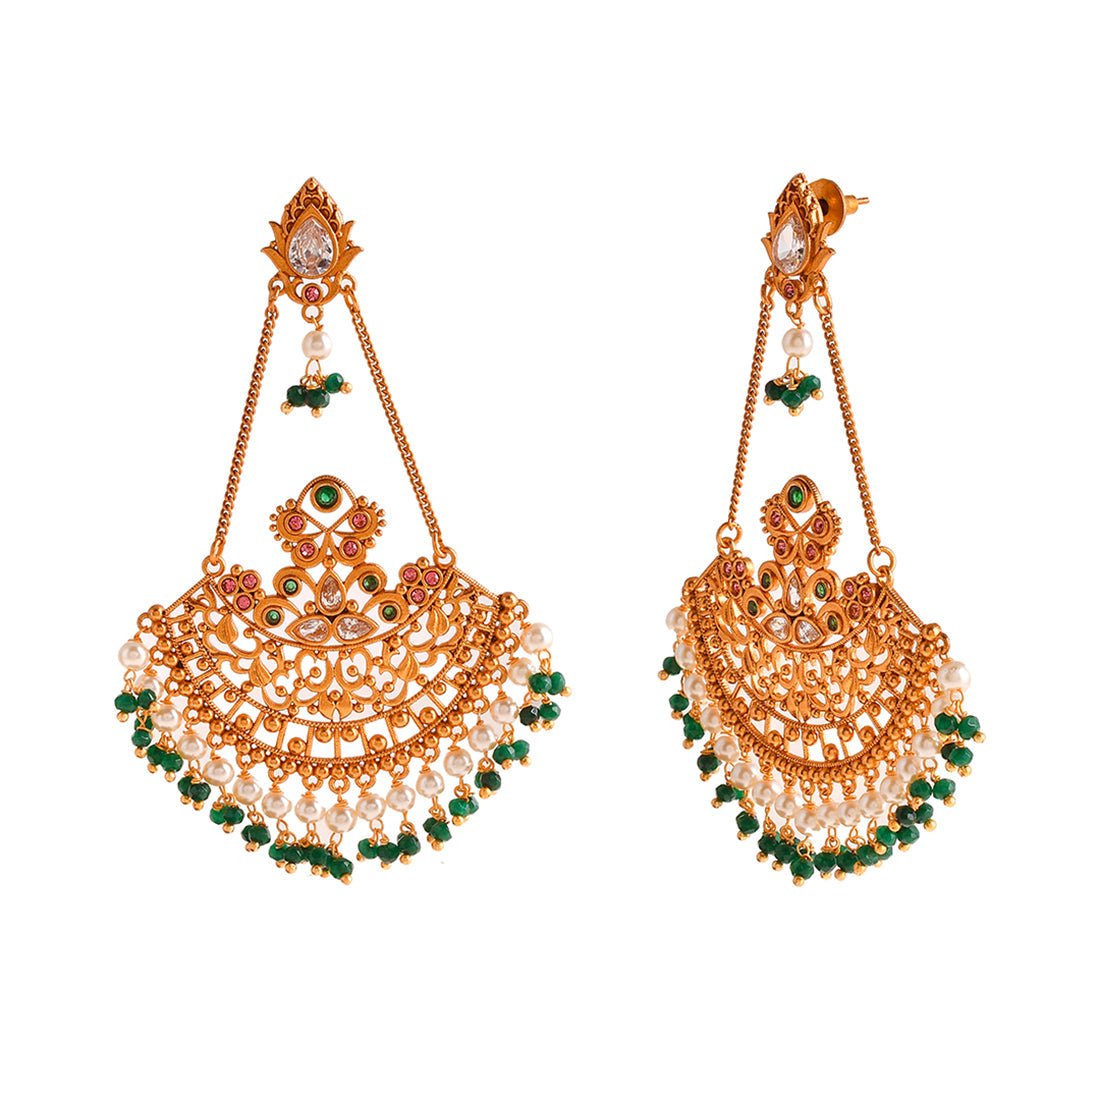 Women's Abharan Ethnic White Pearls And Green Stones Filigree Earrings - Voylla